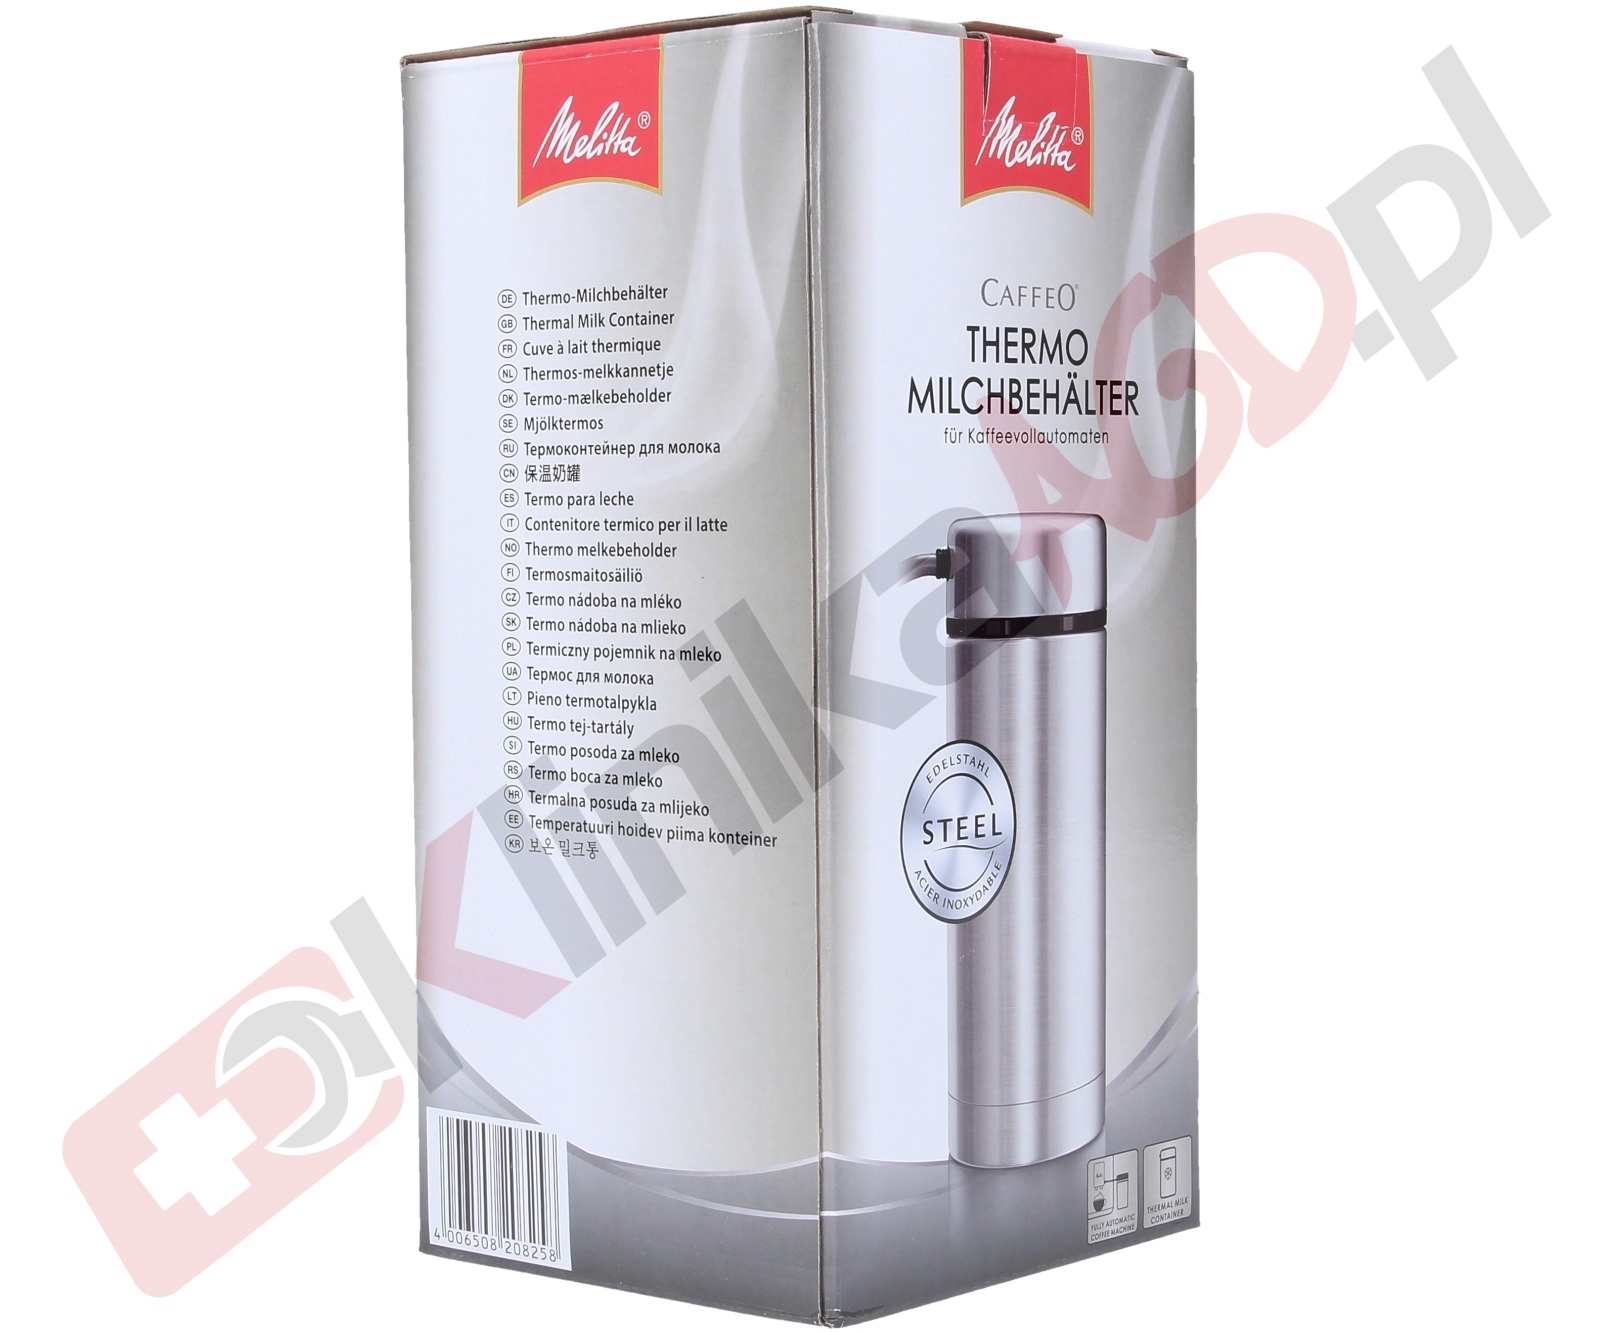  Melitta 208258 Caffeo Thermo Milchbehälter